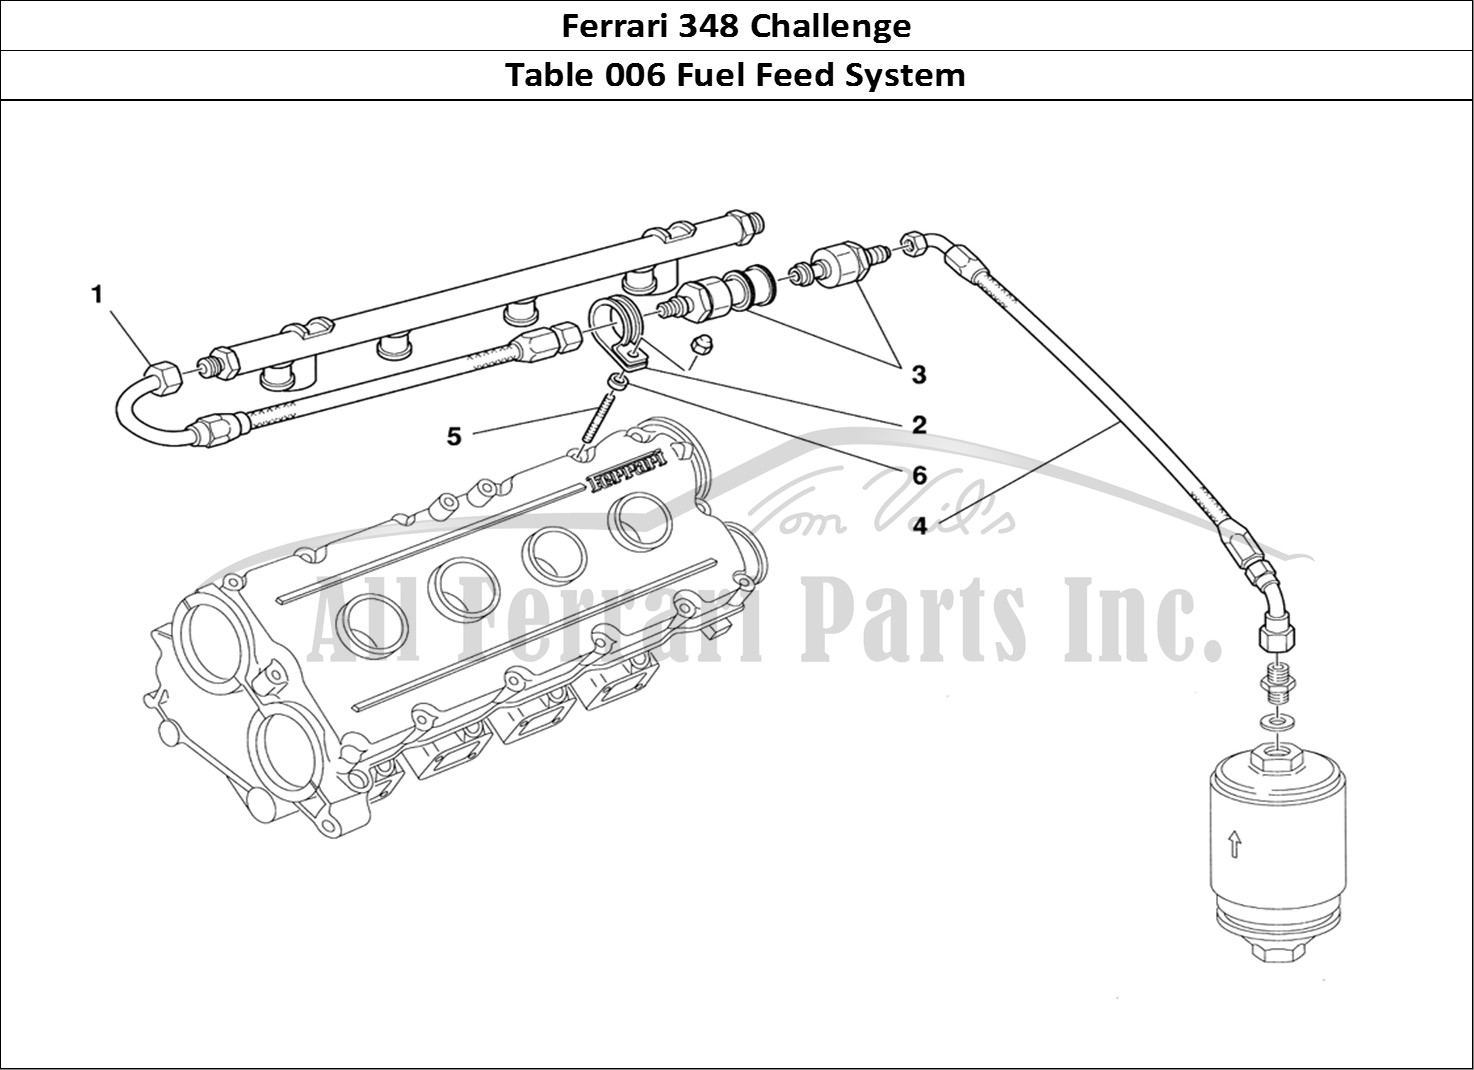 Ferrari Parts Ferrari 348 Challenge (1995) Page 006 Fuel Feed System